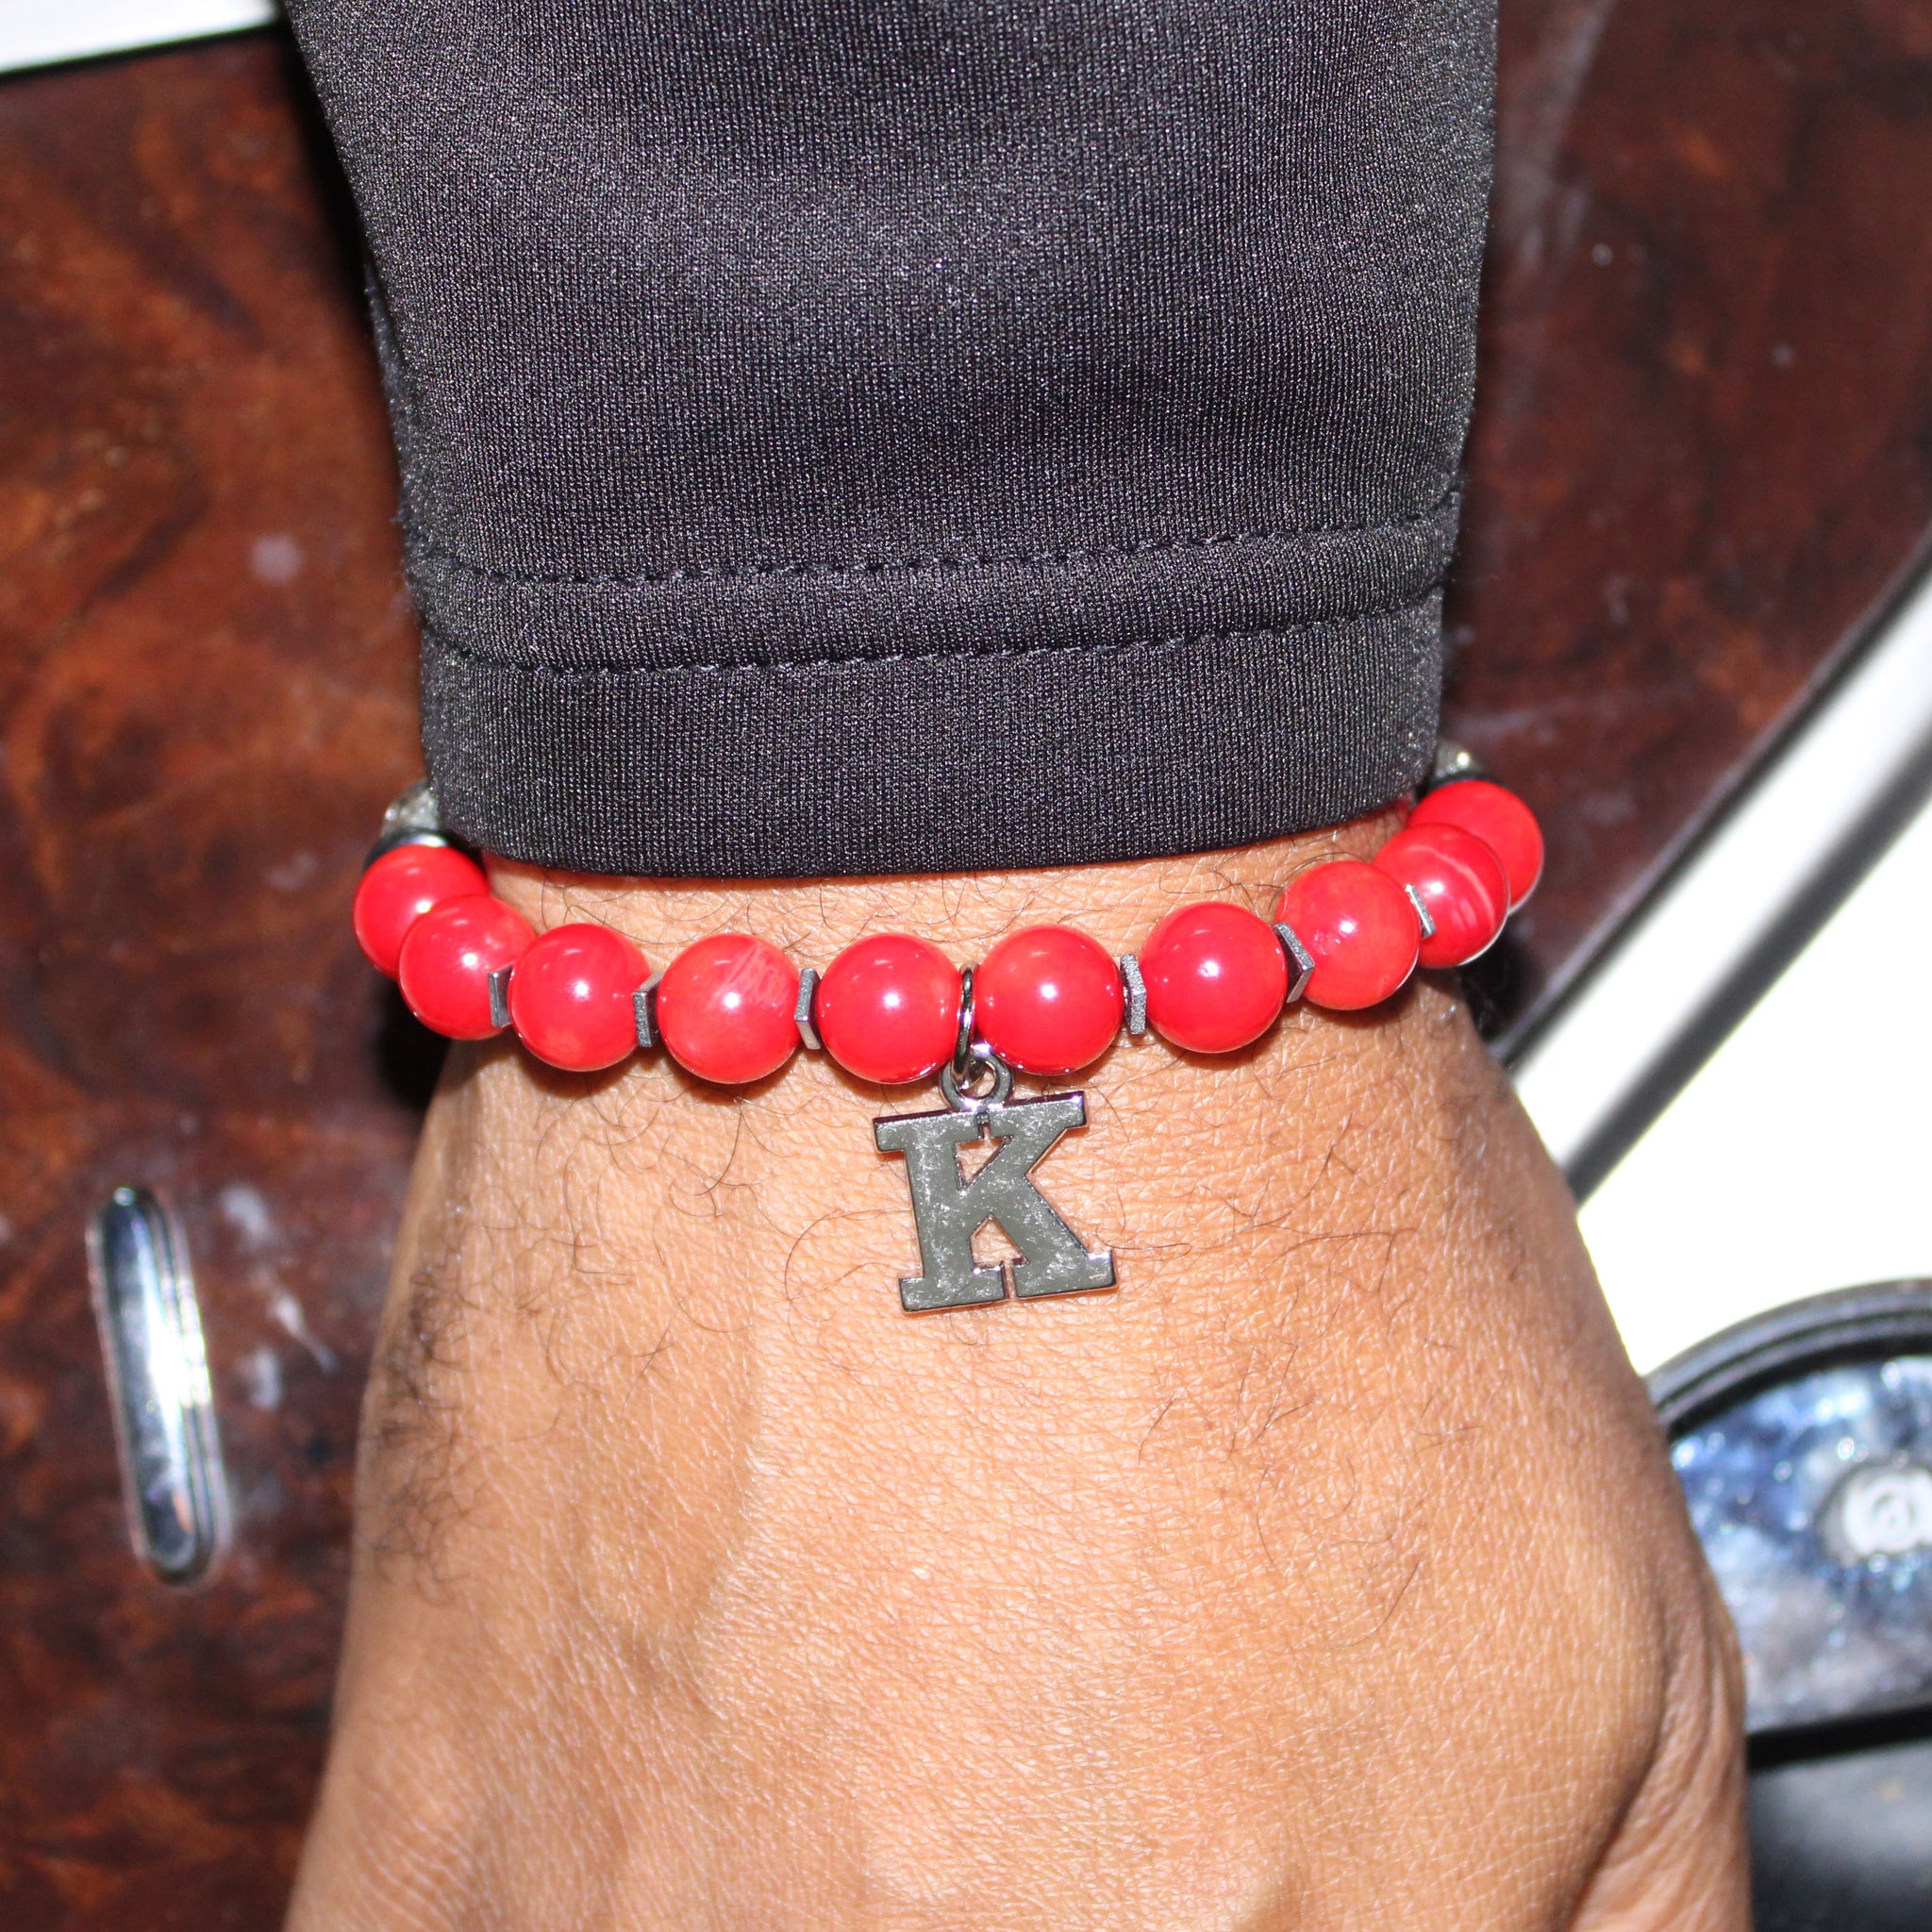 kappa alpha psi greek letter charm bead bracelet on wrist